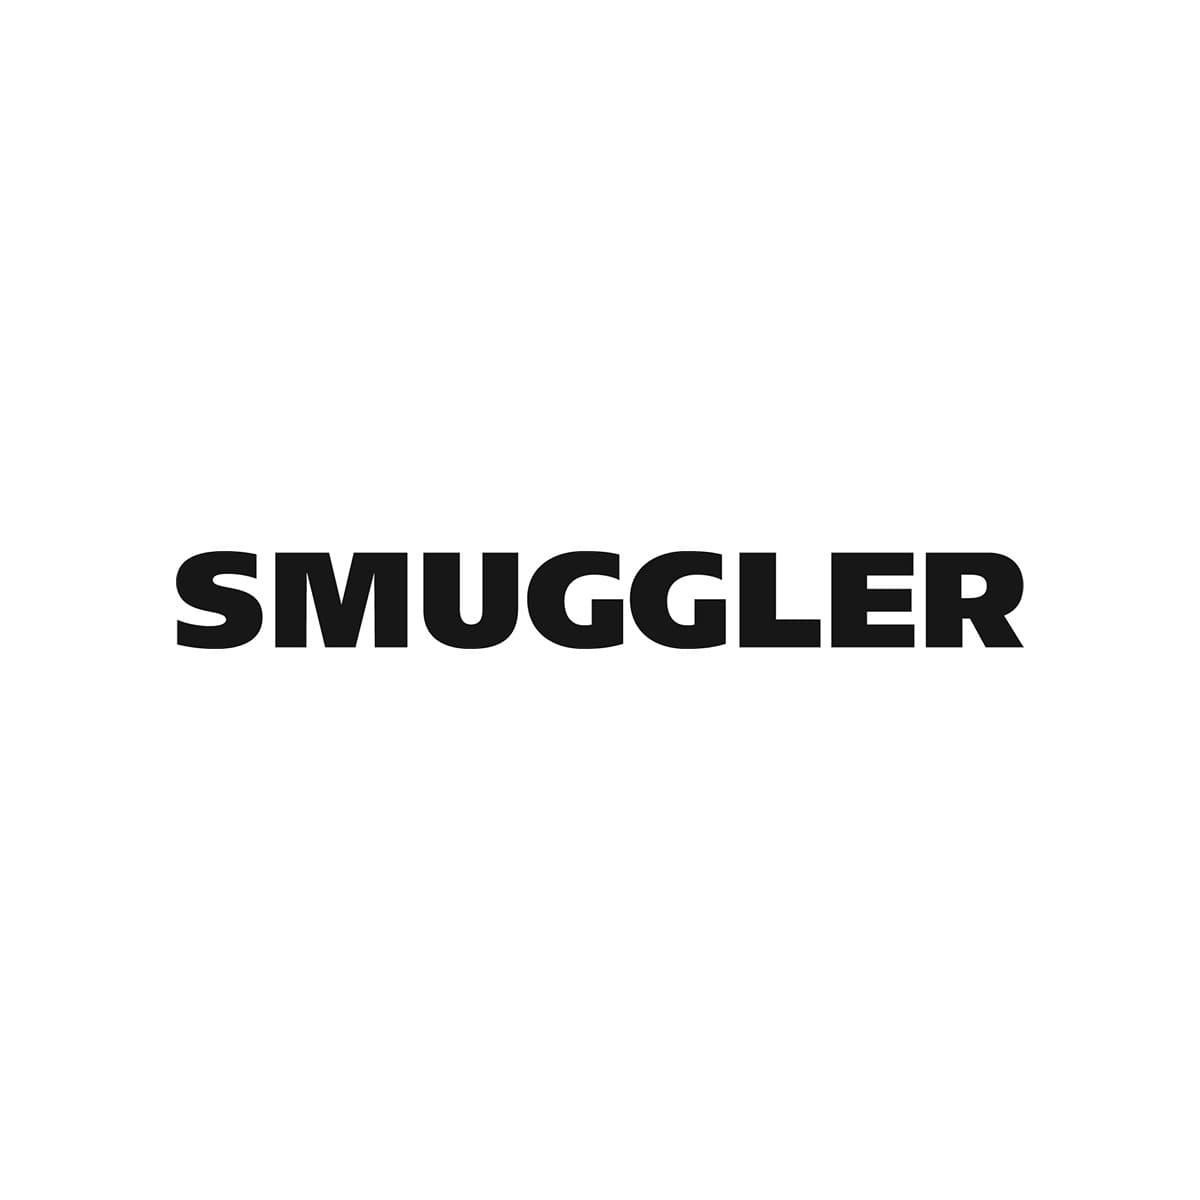 Smuggler logo